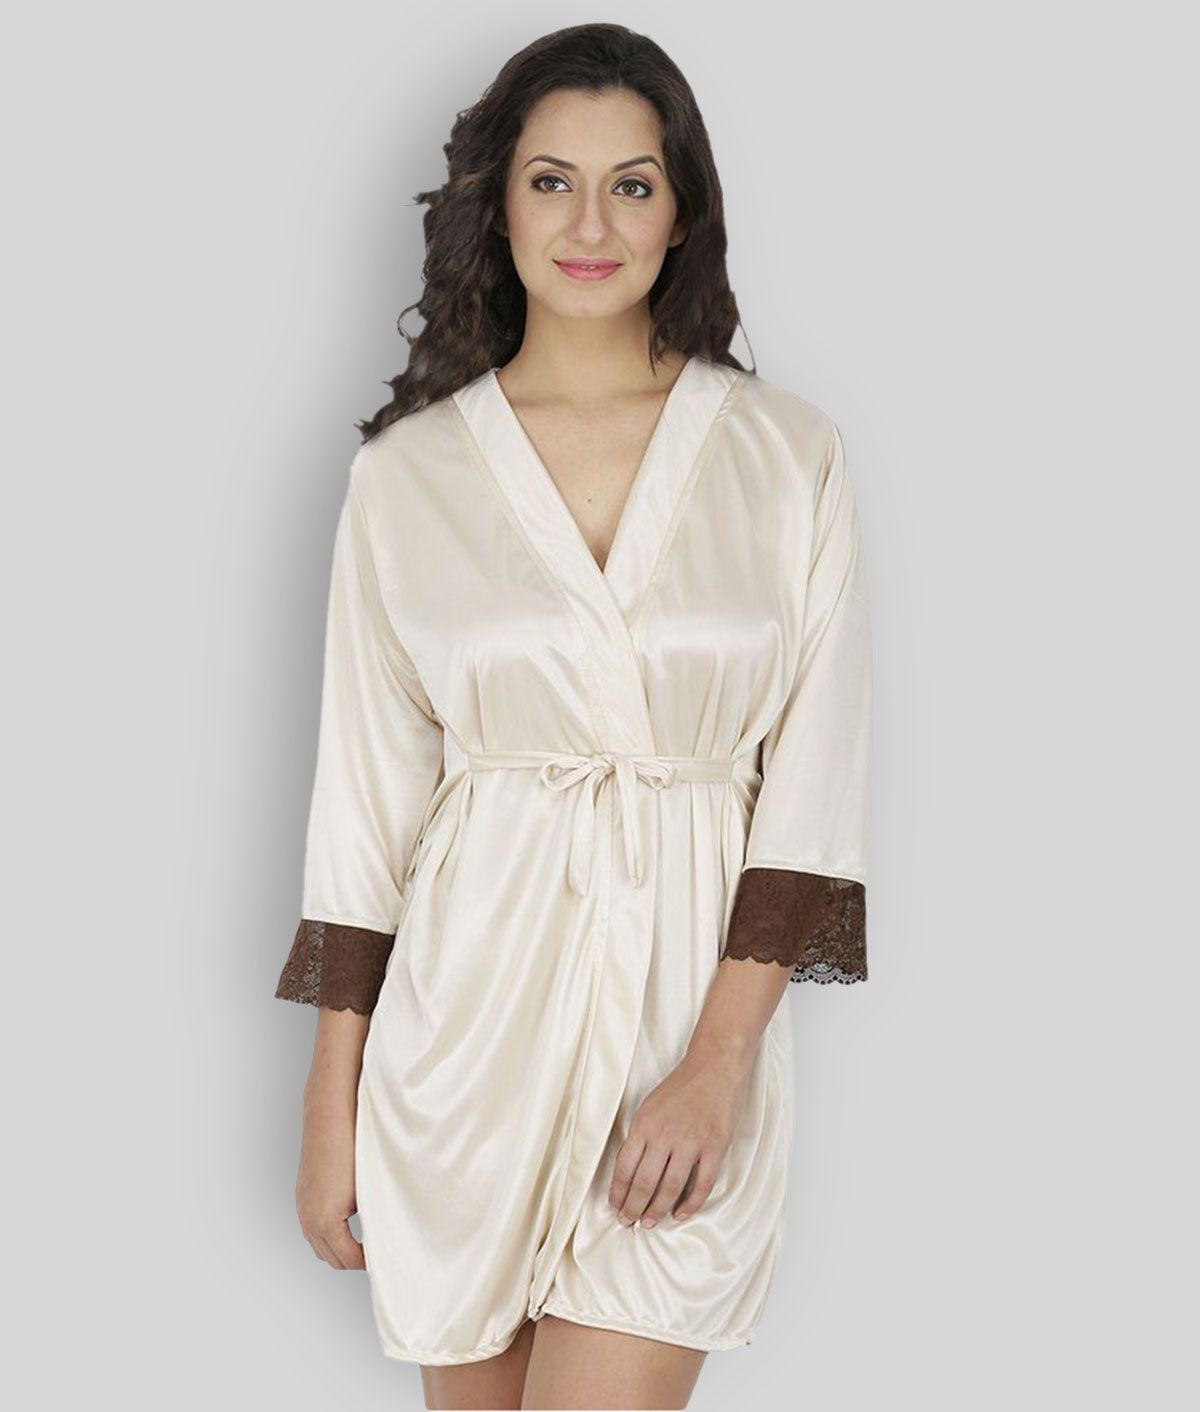     			Klamotten - Off White Satin Women's Nightwear Robes ( Pack of 1 )